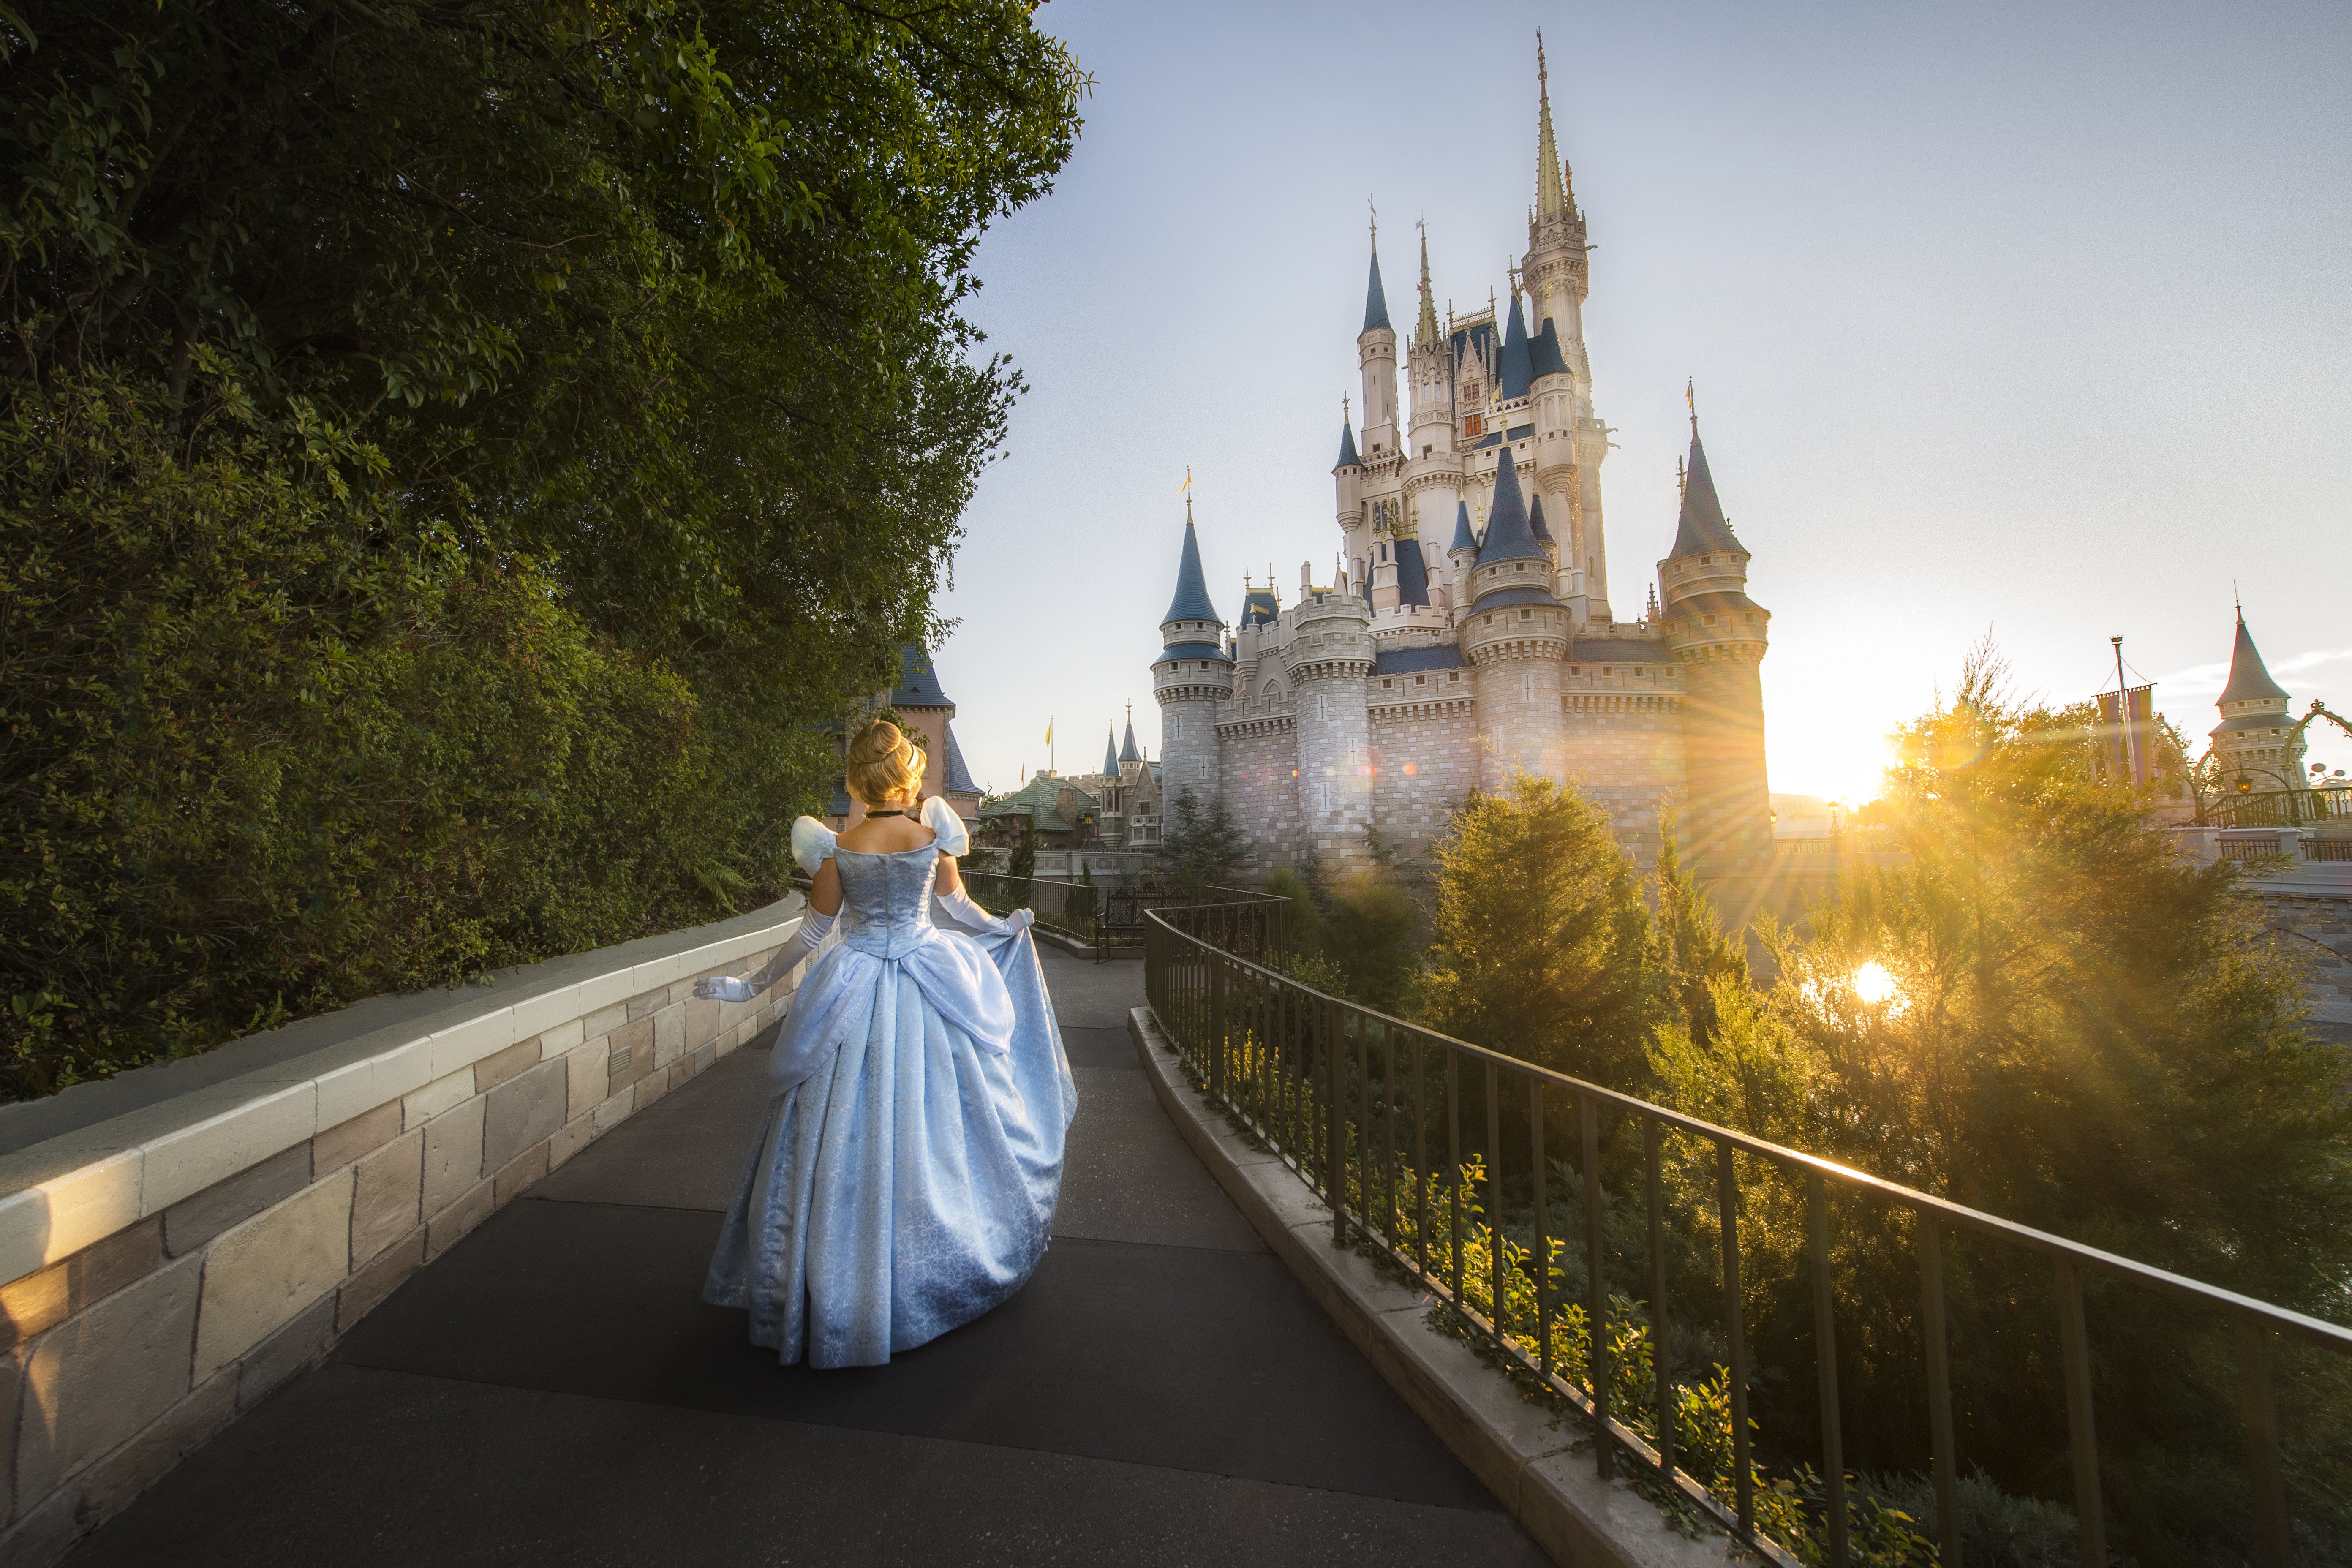 Cinderella Castle at Disney's Magic Kingdom Park